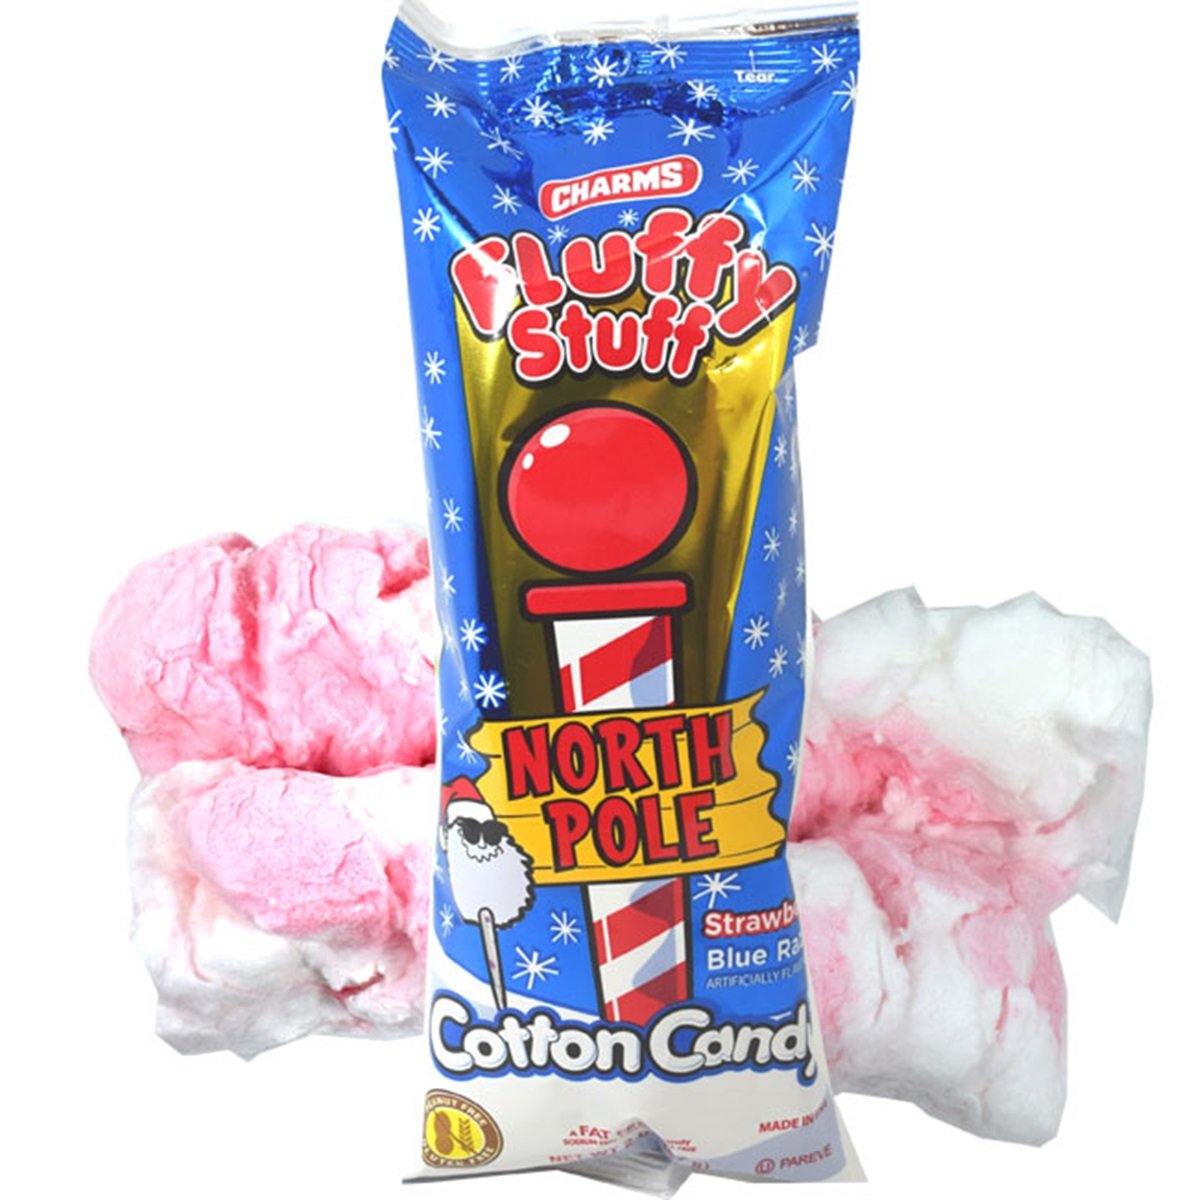 Fluffy Stuff North Pole Cotton Candy